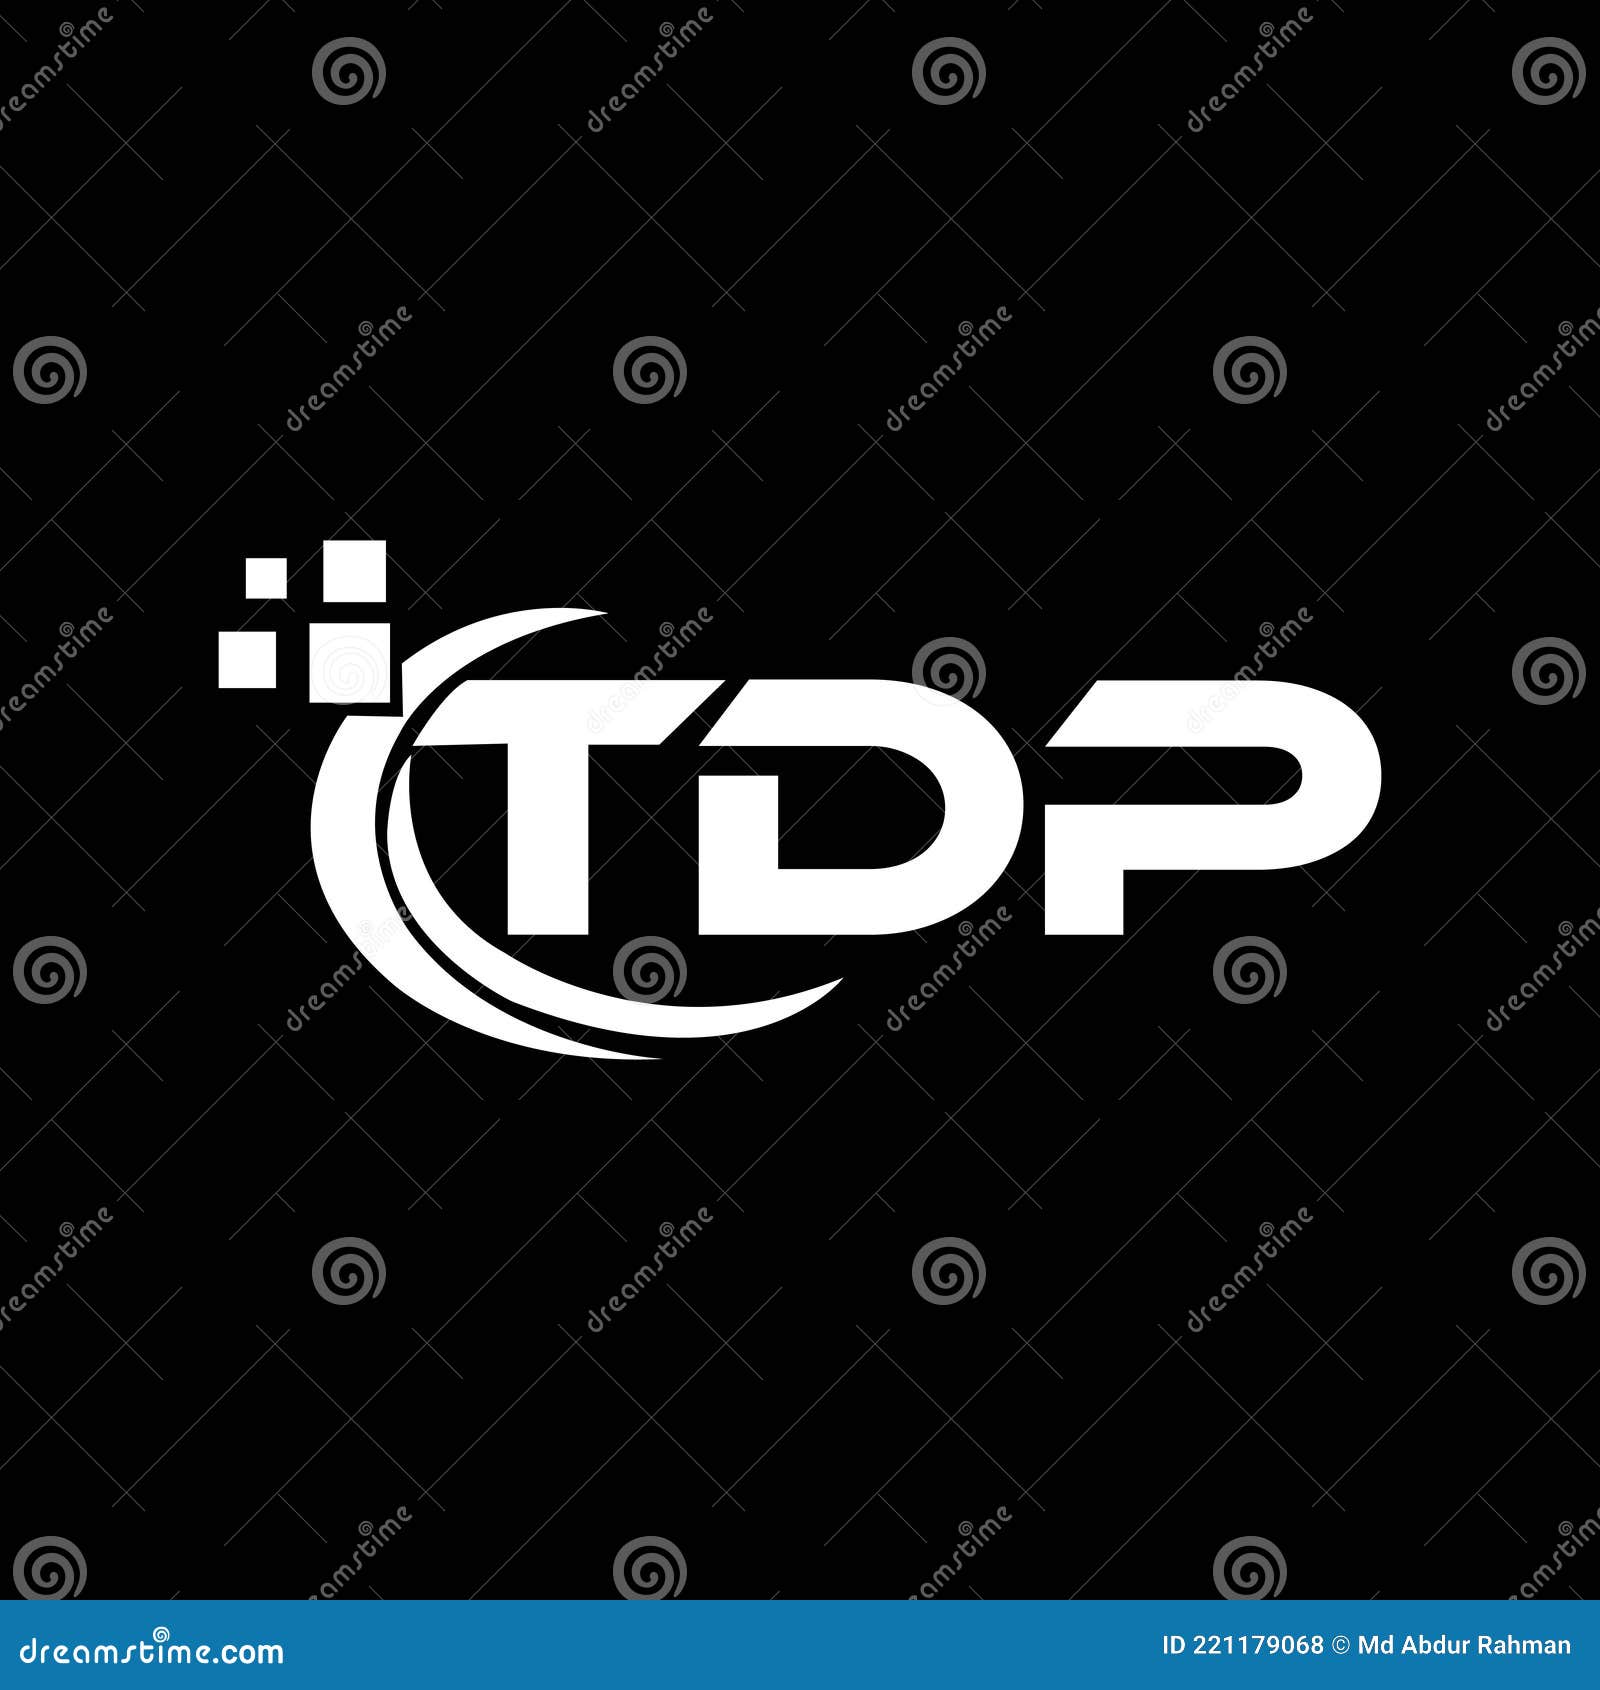 Tdp Photos Download - Colaboratory